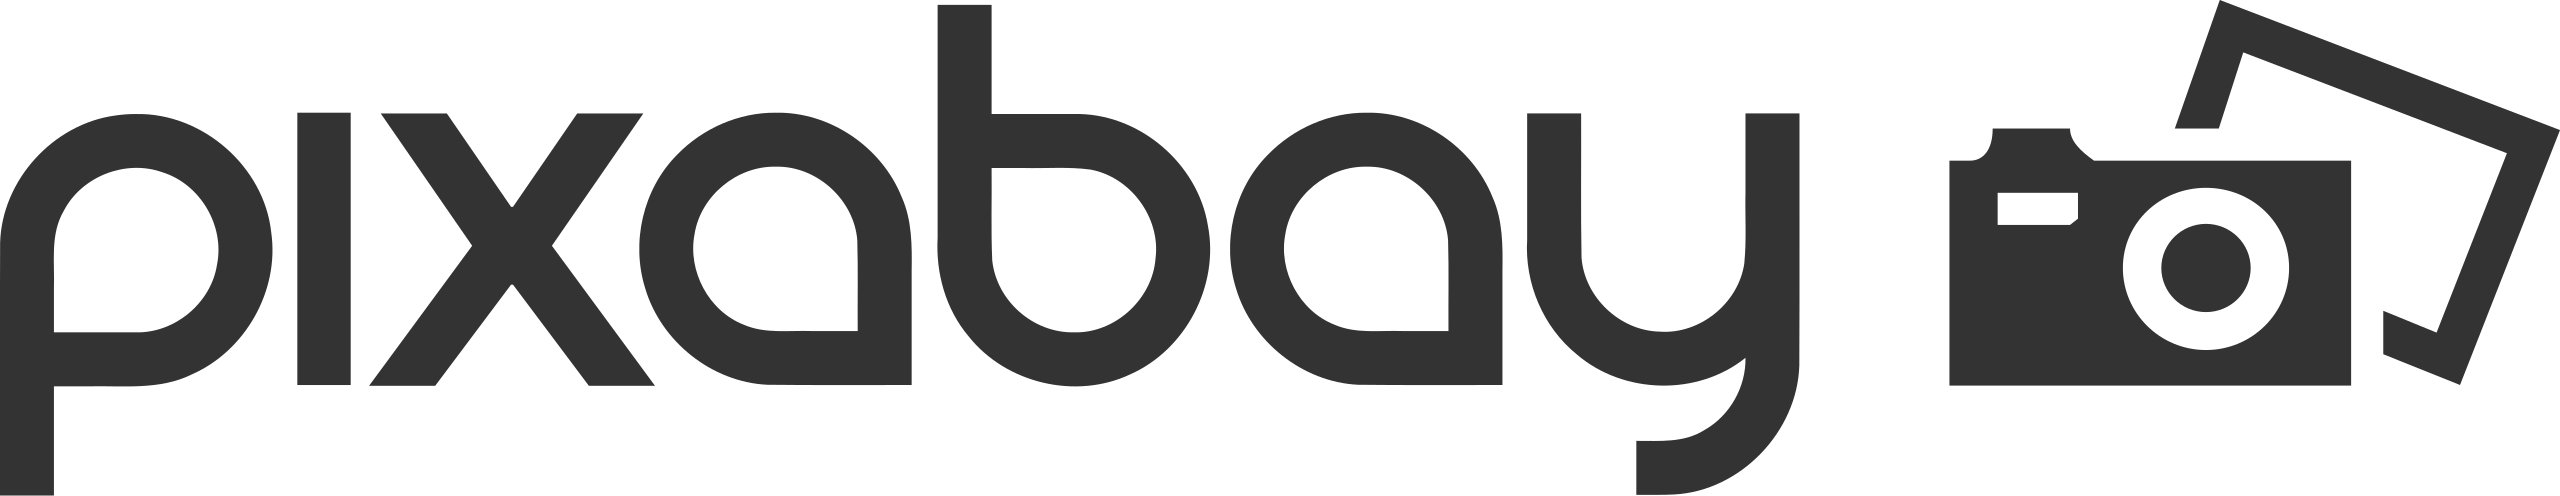 Pixabay logo